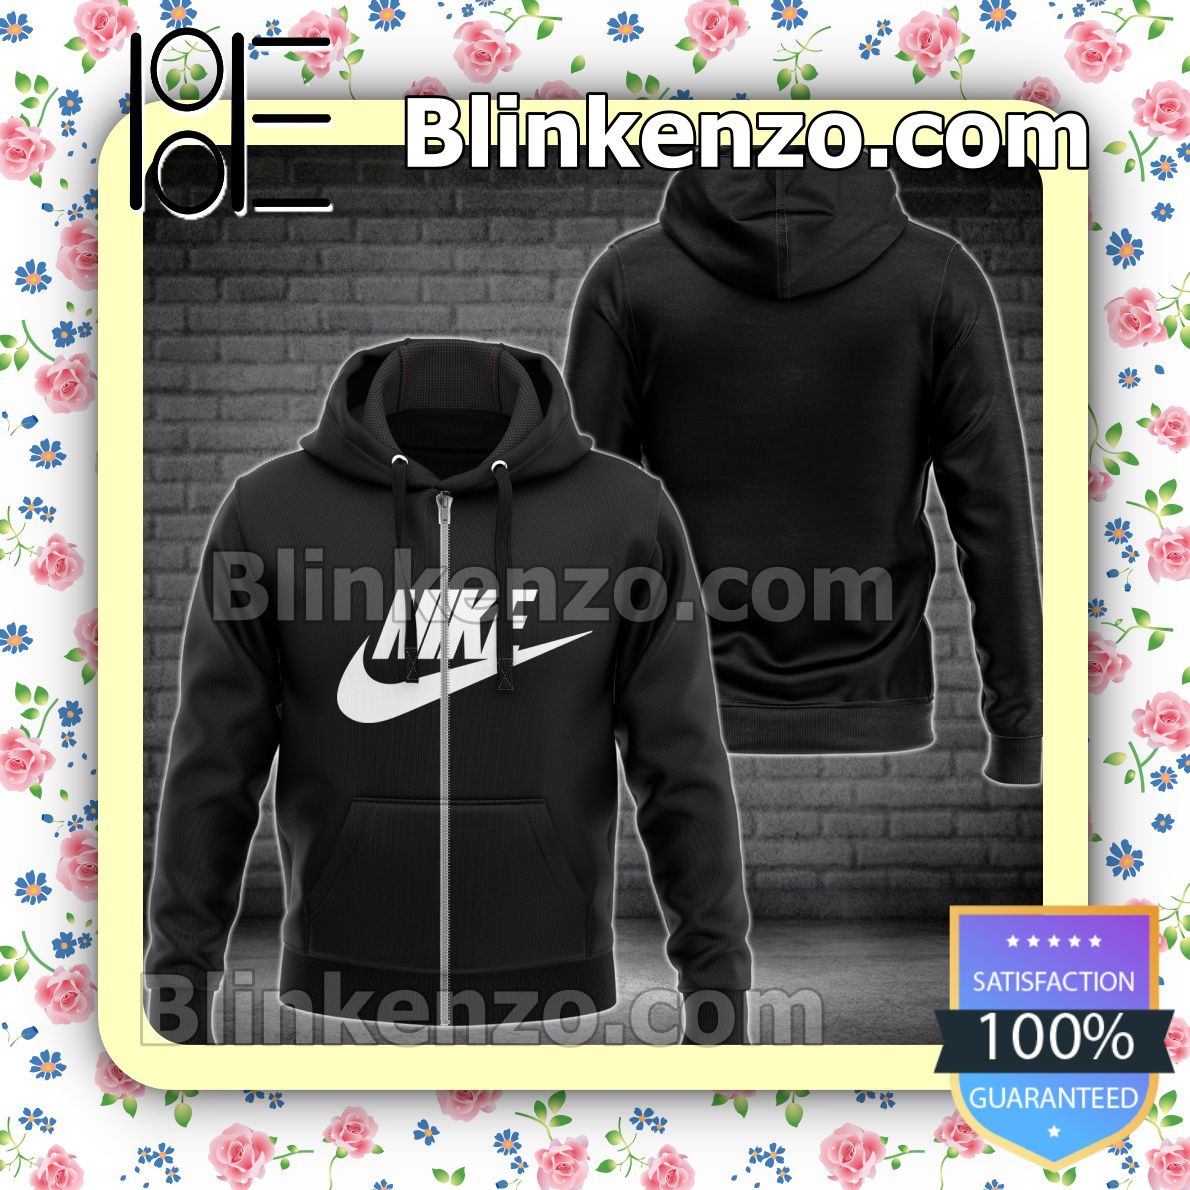 Present Nike White Brand Logo Black Full-Zip Hooded Fleece Sweatshirt